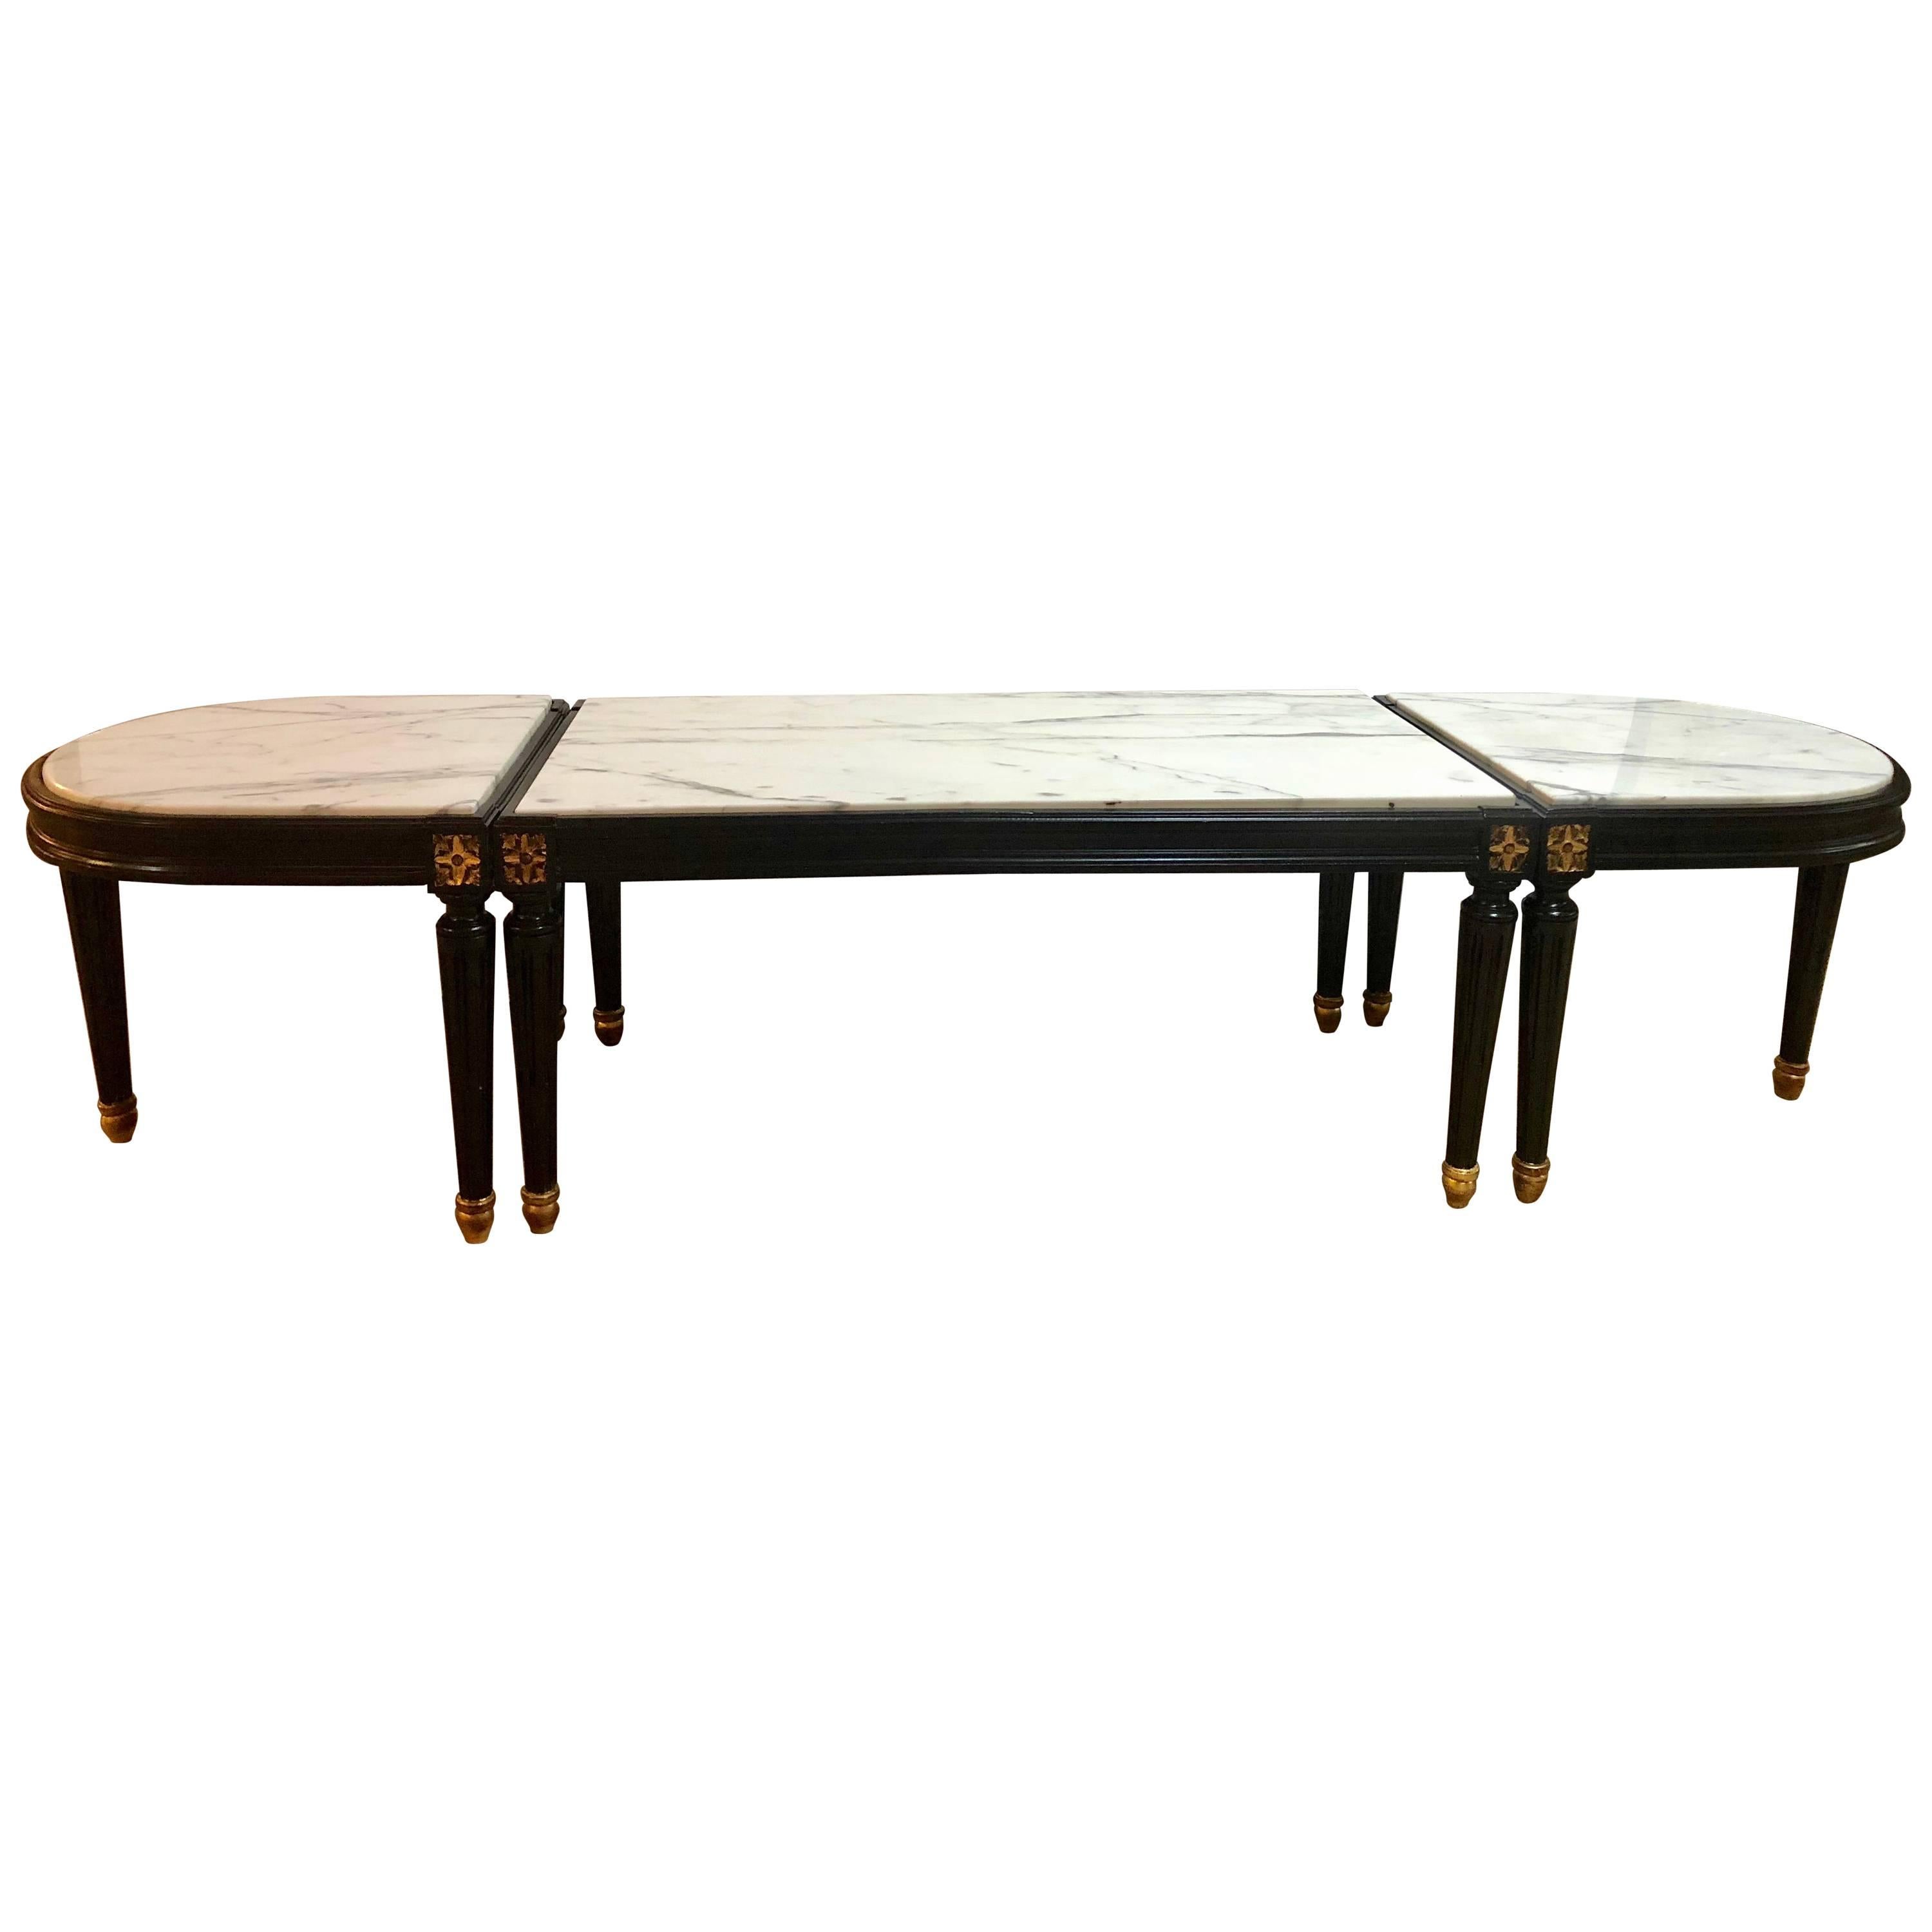 Louis XVI Style Inset Marble-Top Three-Piece Coffee Table, Maison Jansen Manner